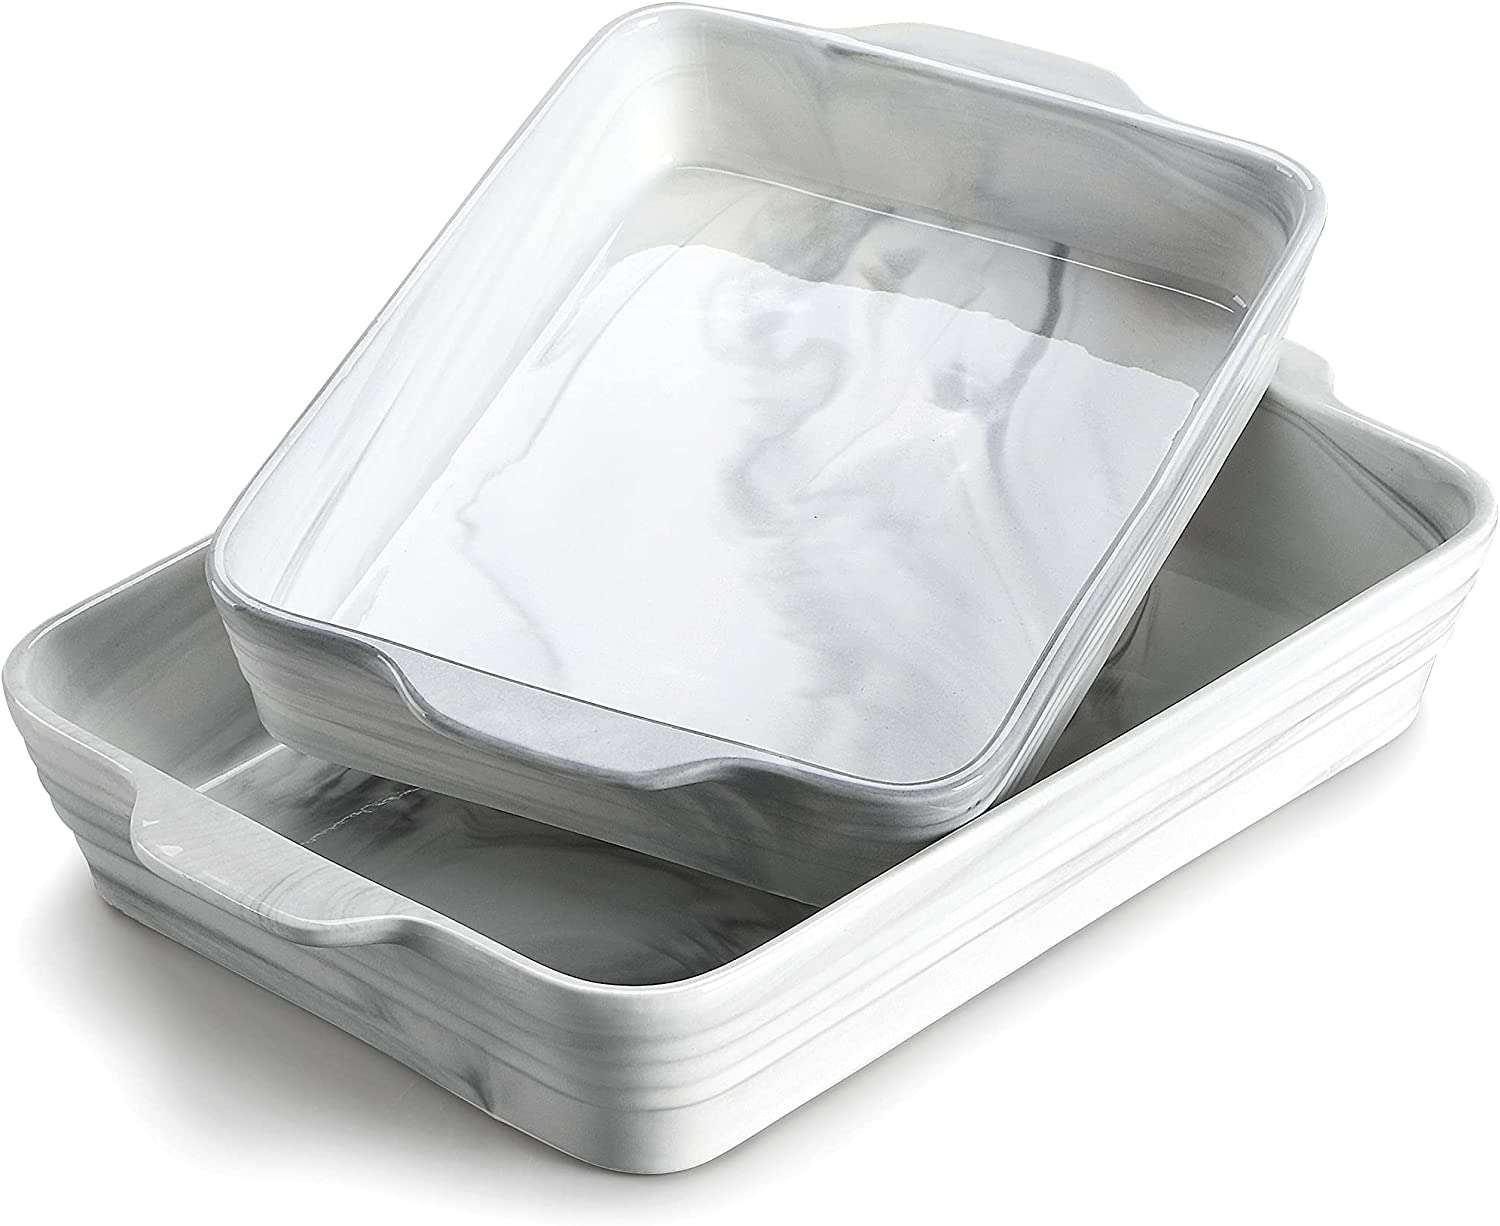 6. MALACASA Porcelain Baking Dish Set